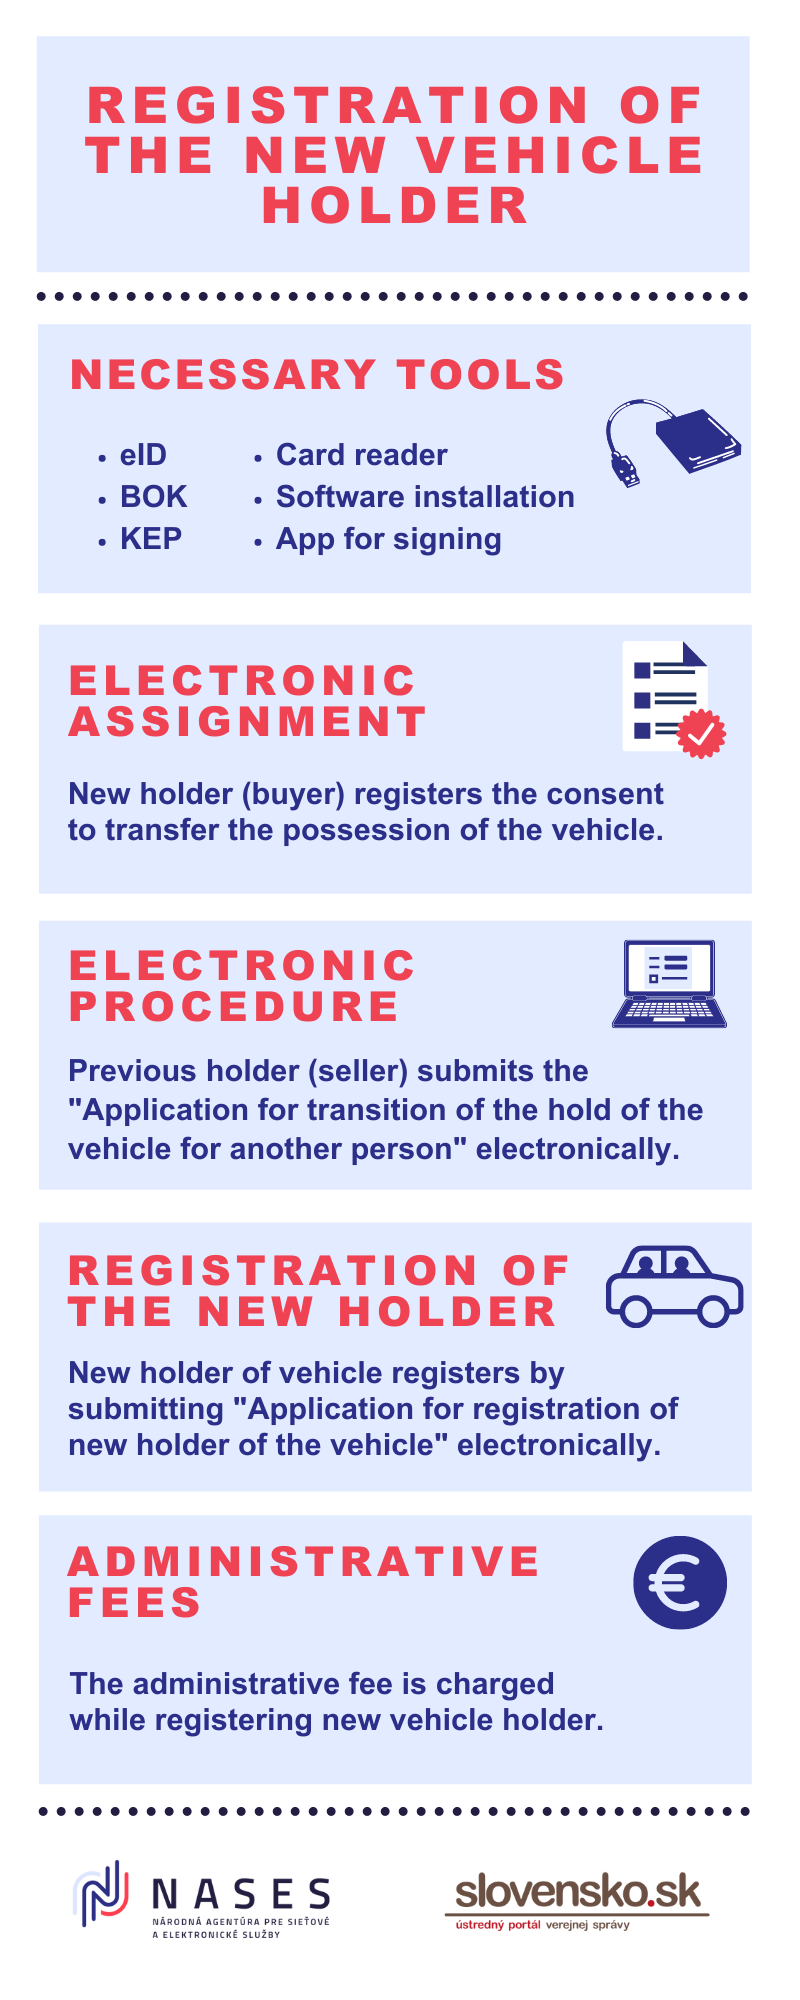 Registration of new vehicle holder